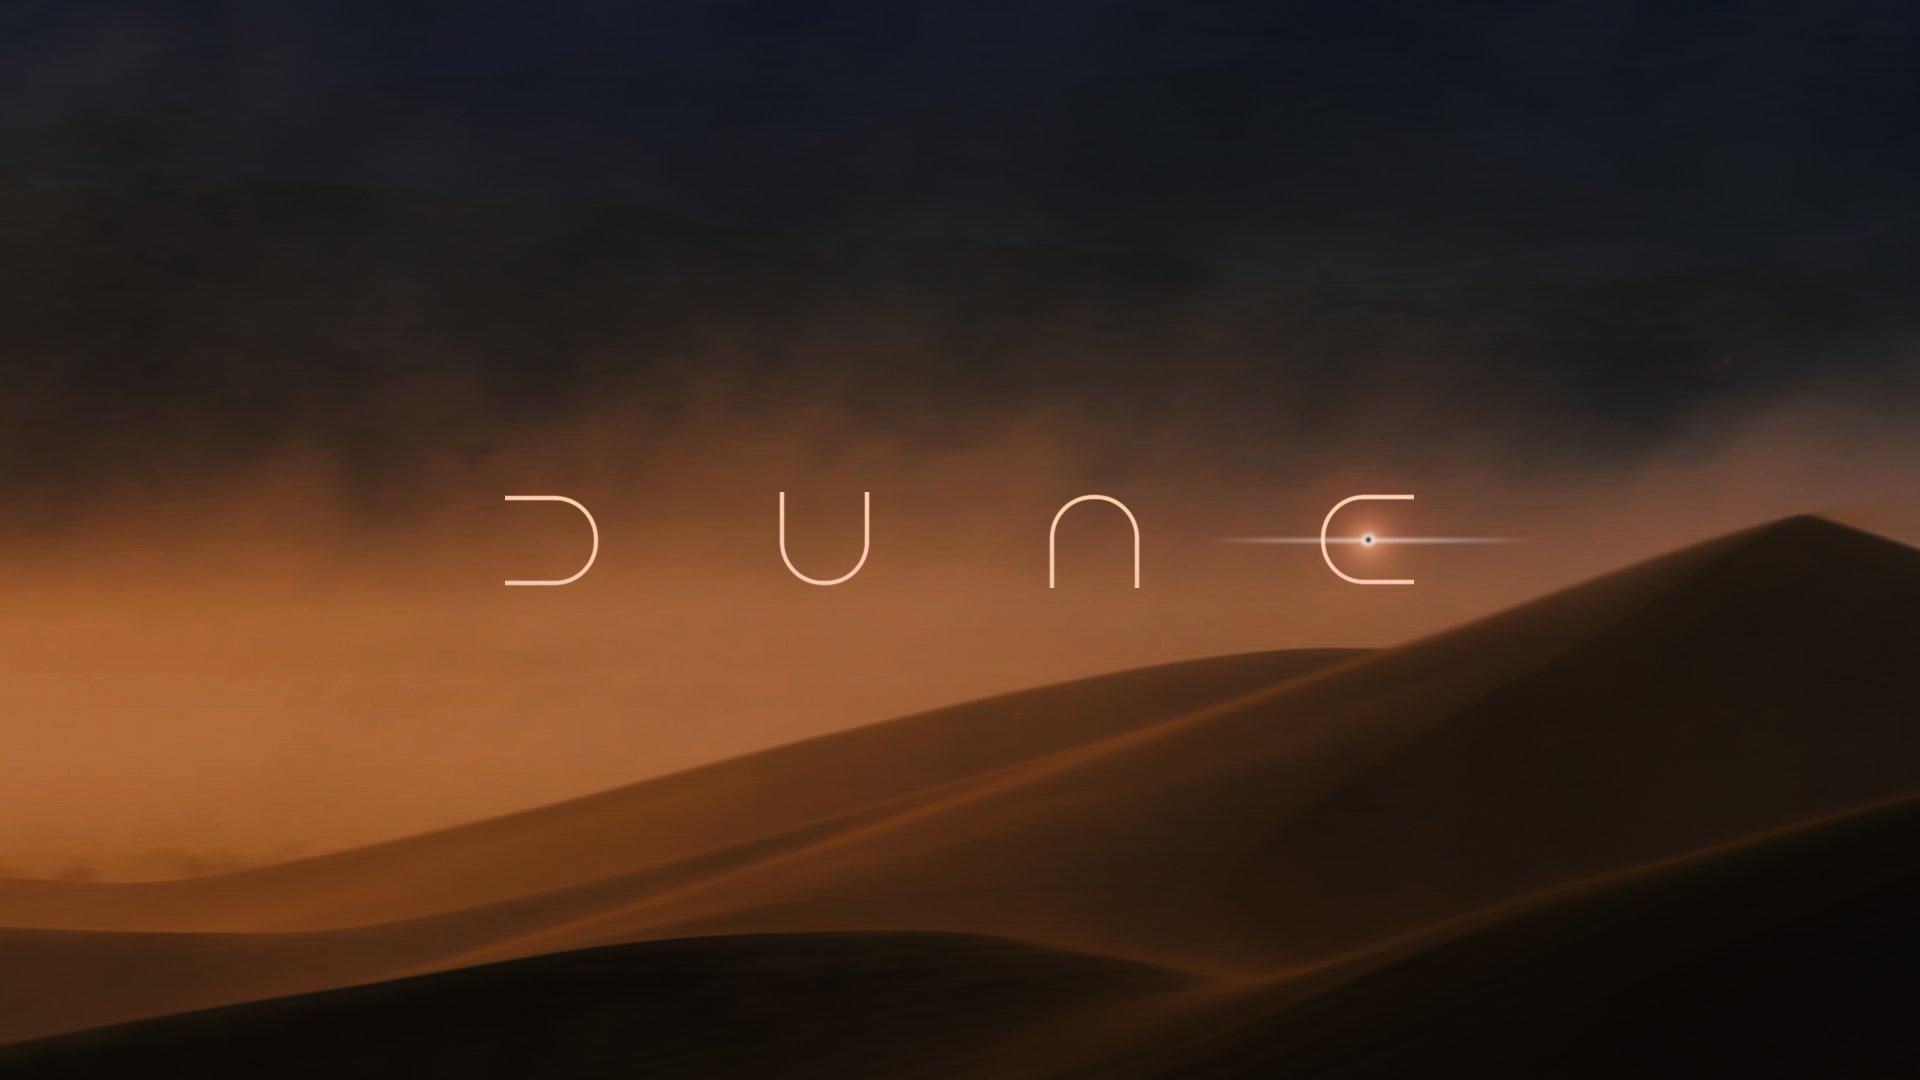 Dune 4k Wallpapers - Top Free Dune 4k Backgrounds - WallpaperAccess